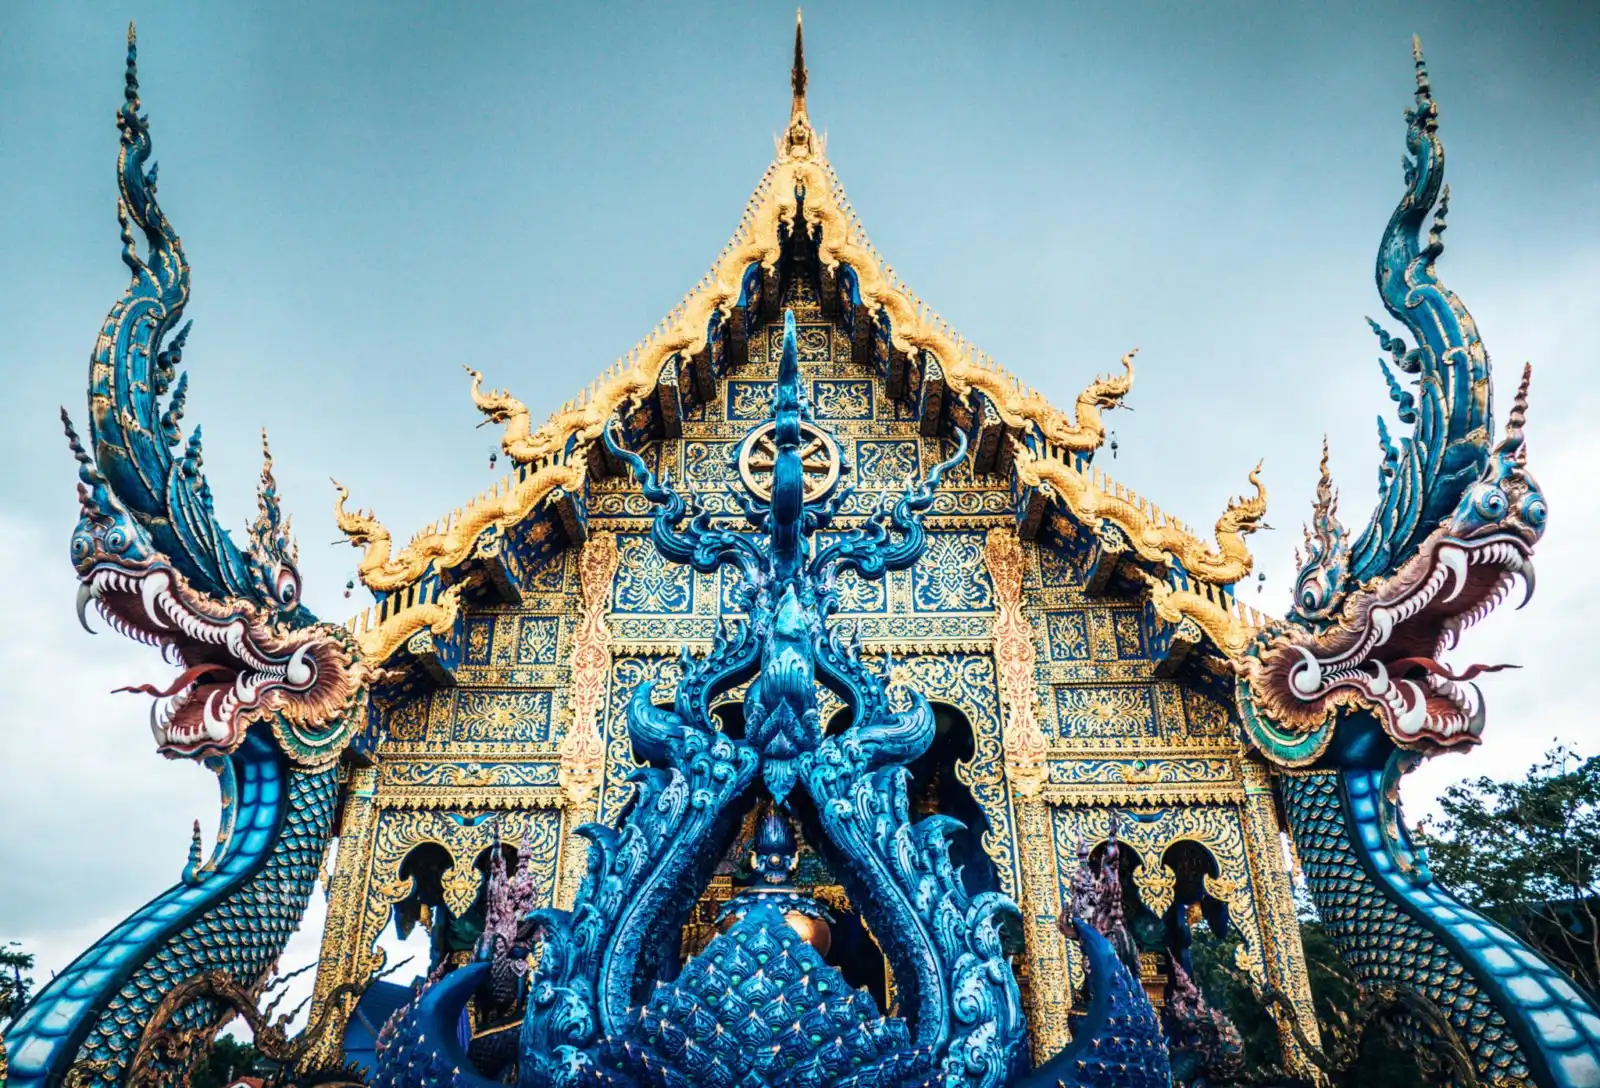 The Blue Temple, Chiang Rai